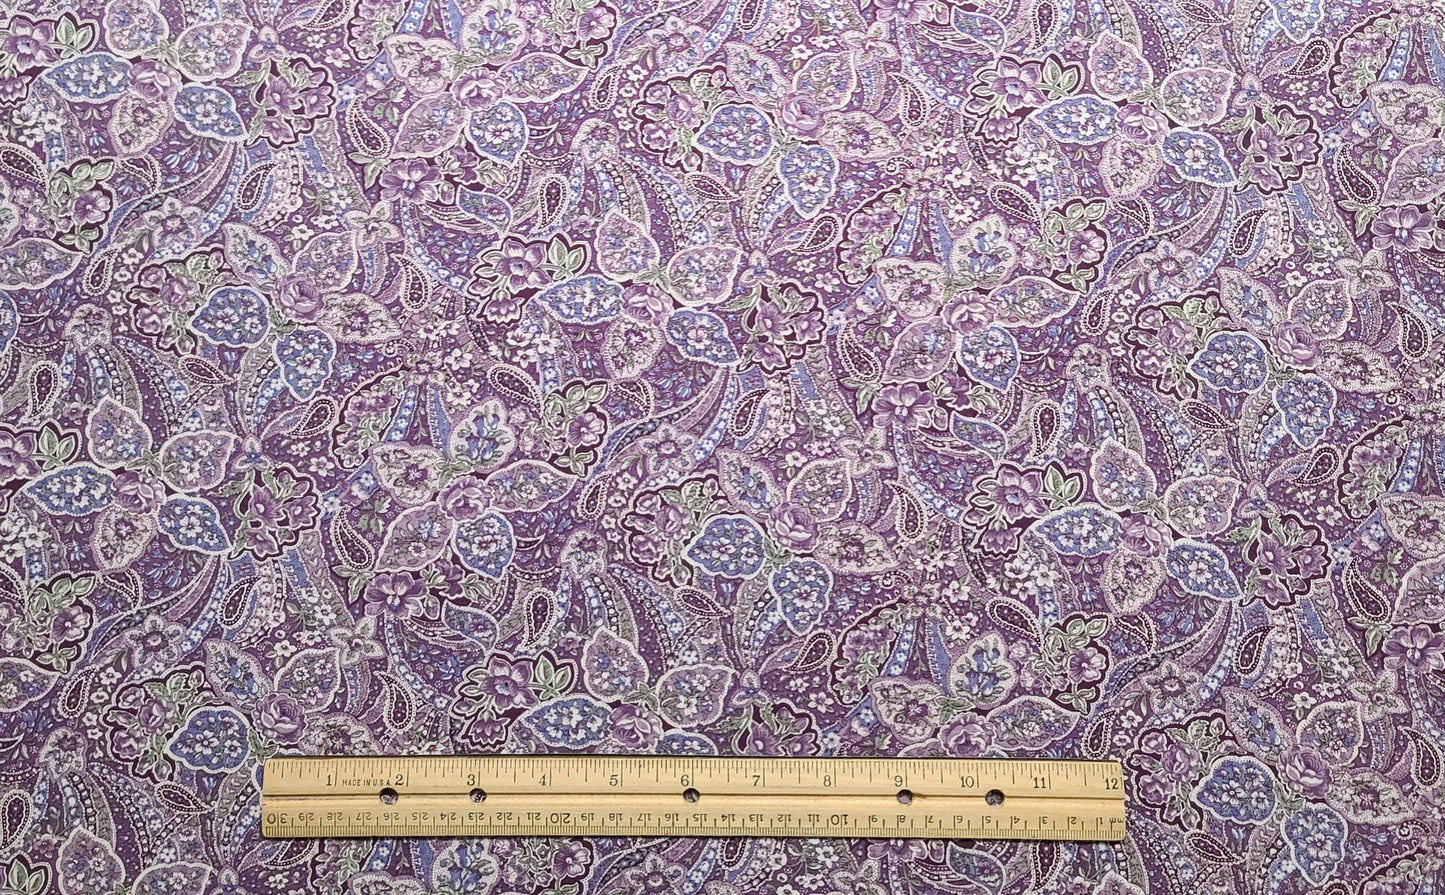 Peter Pan Fabrics - Plum, Lavender, Slate, White Paisley Flower Print Fabric